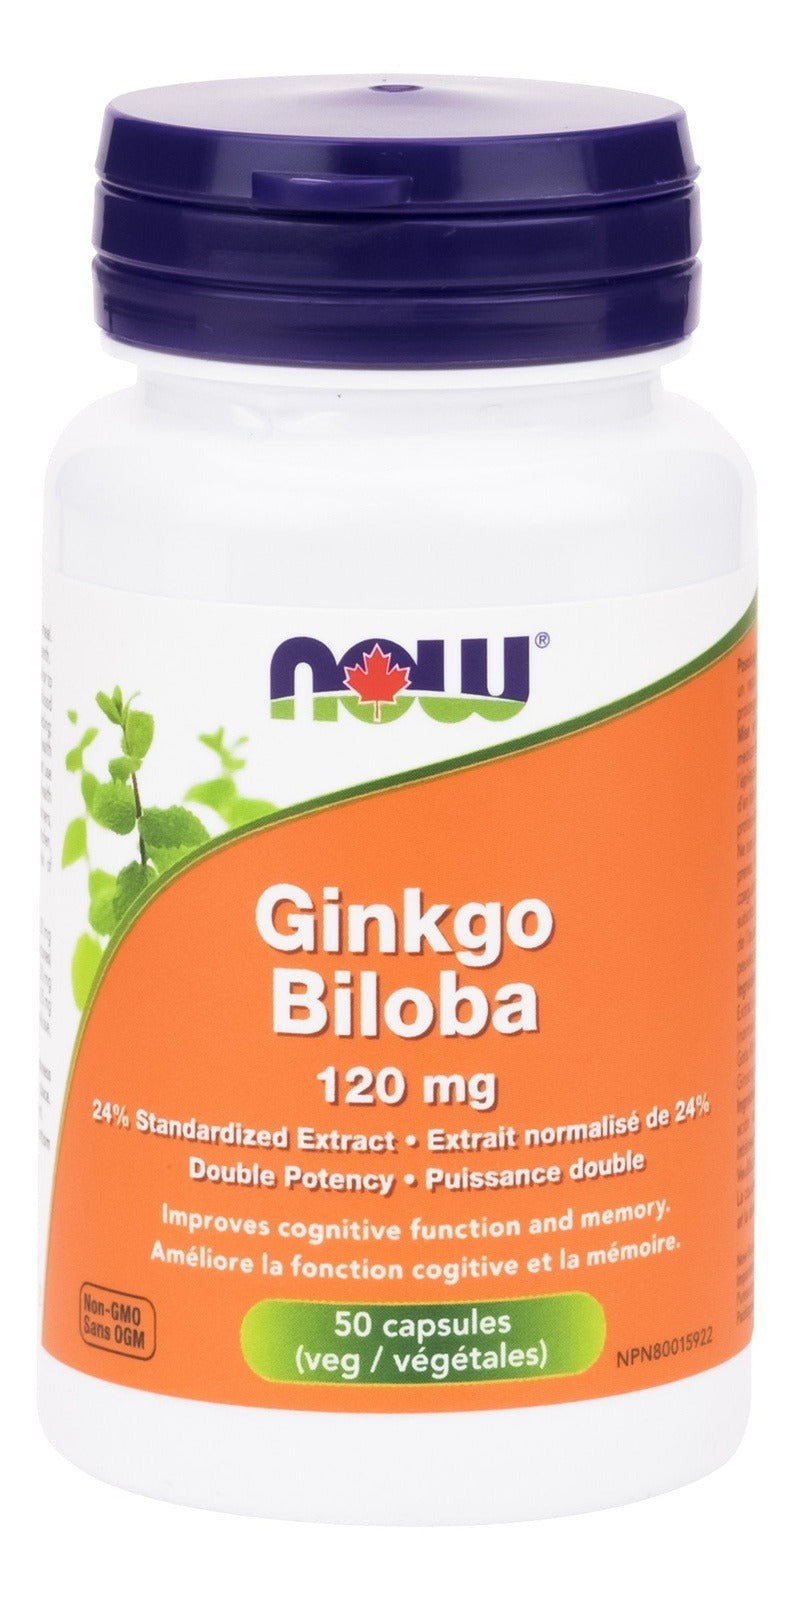 NOW Ginkgo Biloba 120 mg Capsules Image 1